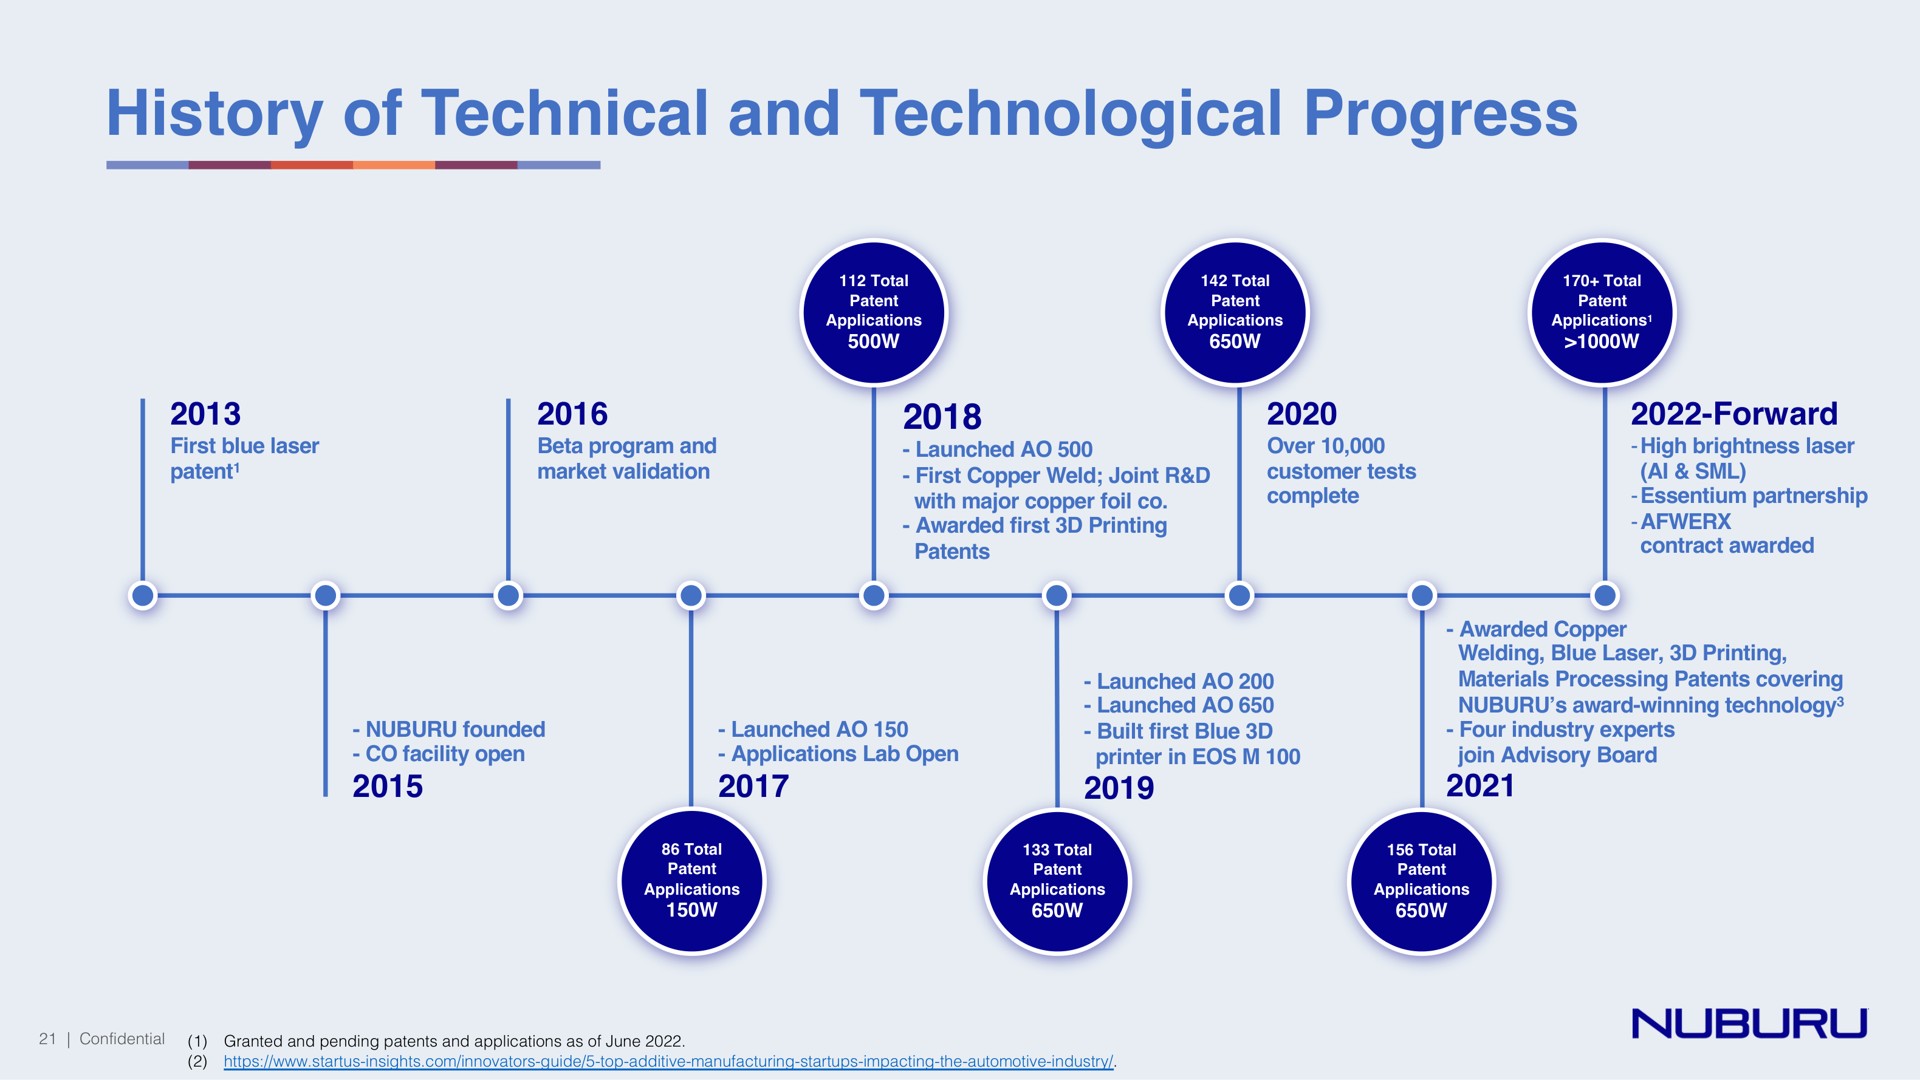 history of technical and technological progress alt | NUBURU